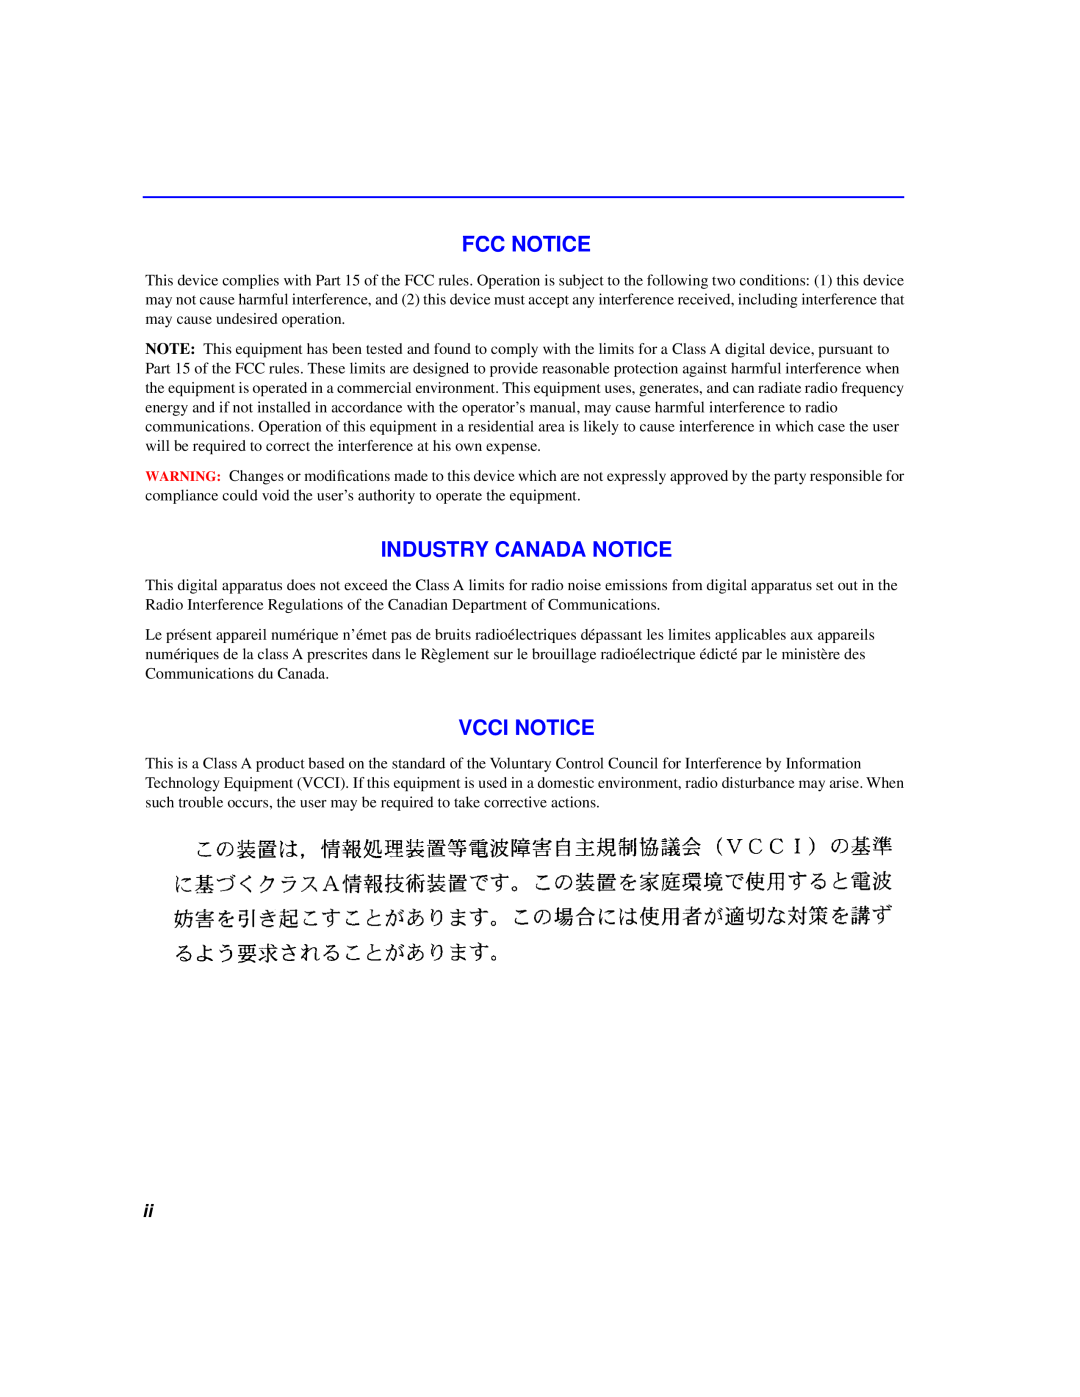 Cabletron Systems 2H253-25R manual Fcc Notice, Industry Canada Notice, Vcci Notice 